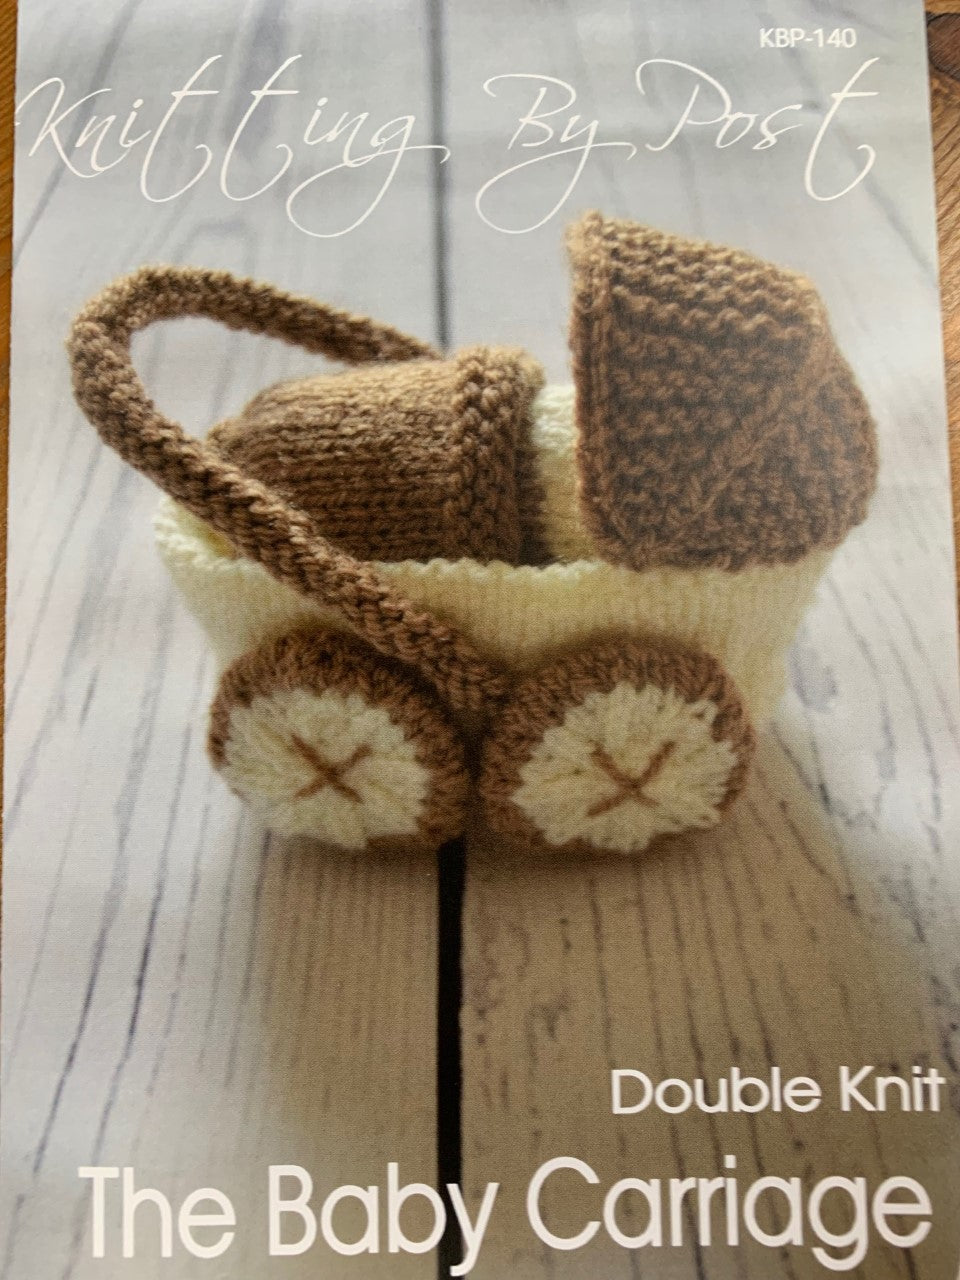 140 KBP-140 The Baby Carriage dk knitting pattern